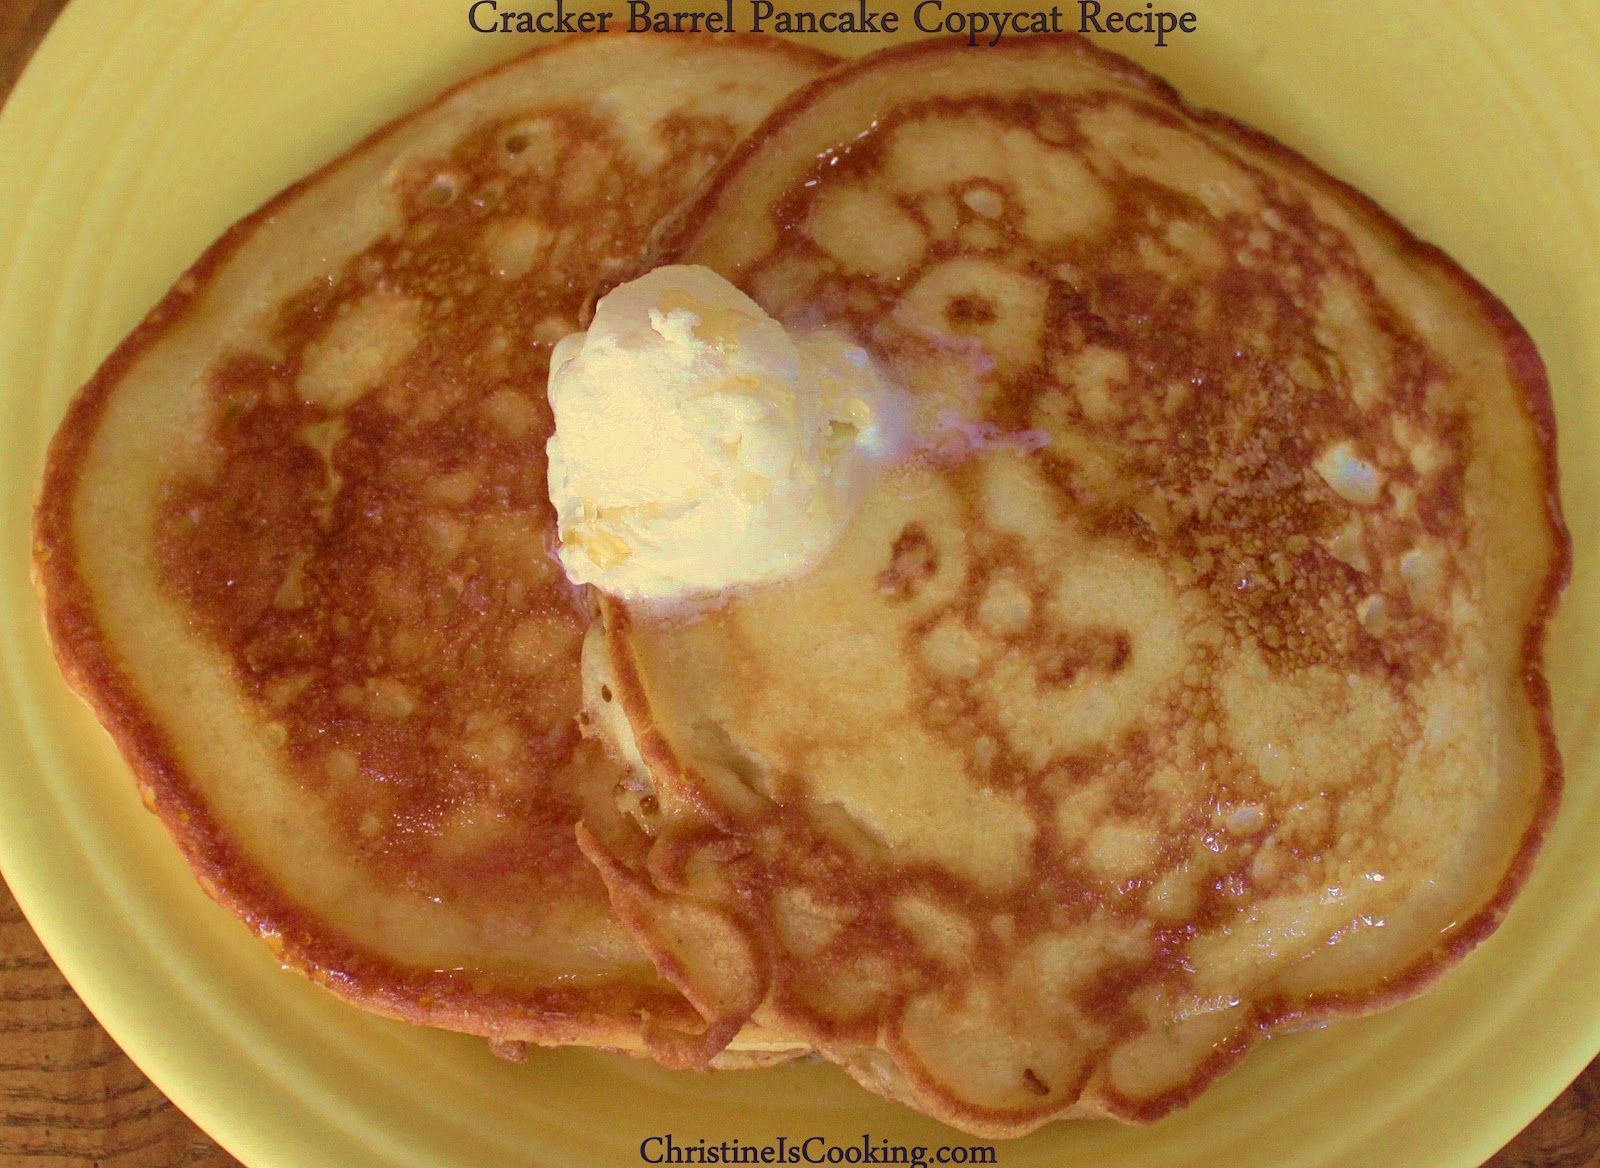 A "copycat" version of the Cracker Barrel pancake recipe (because thos